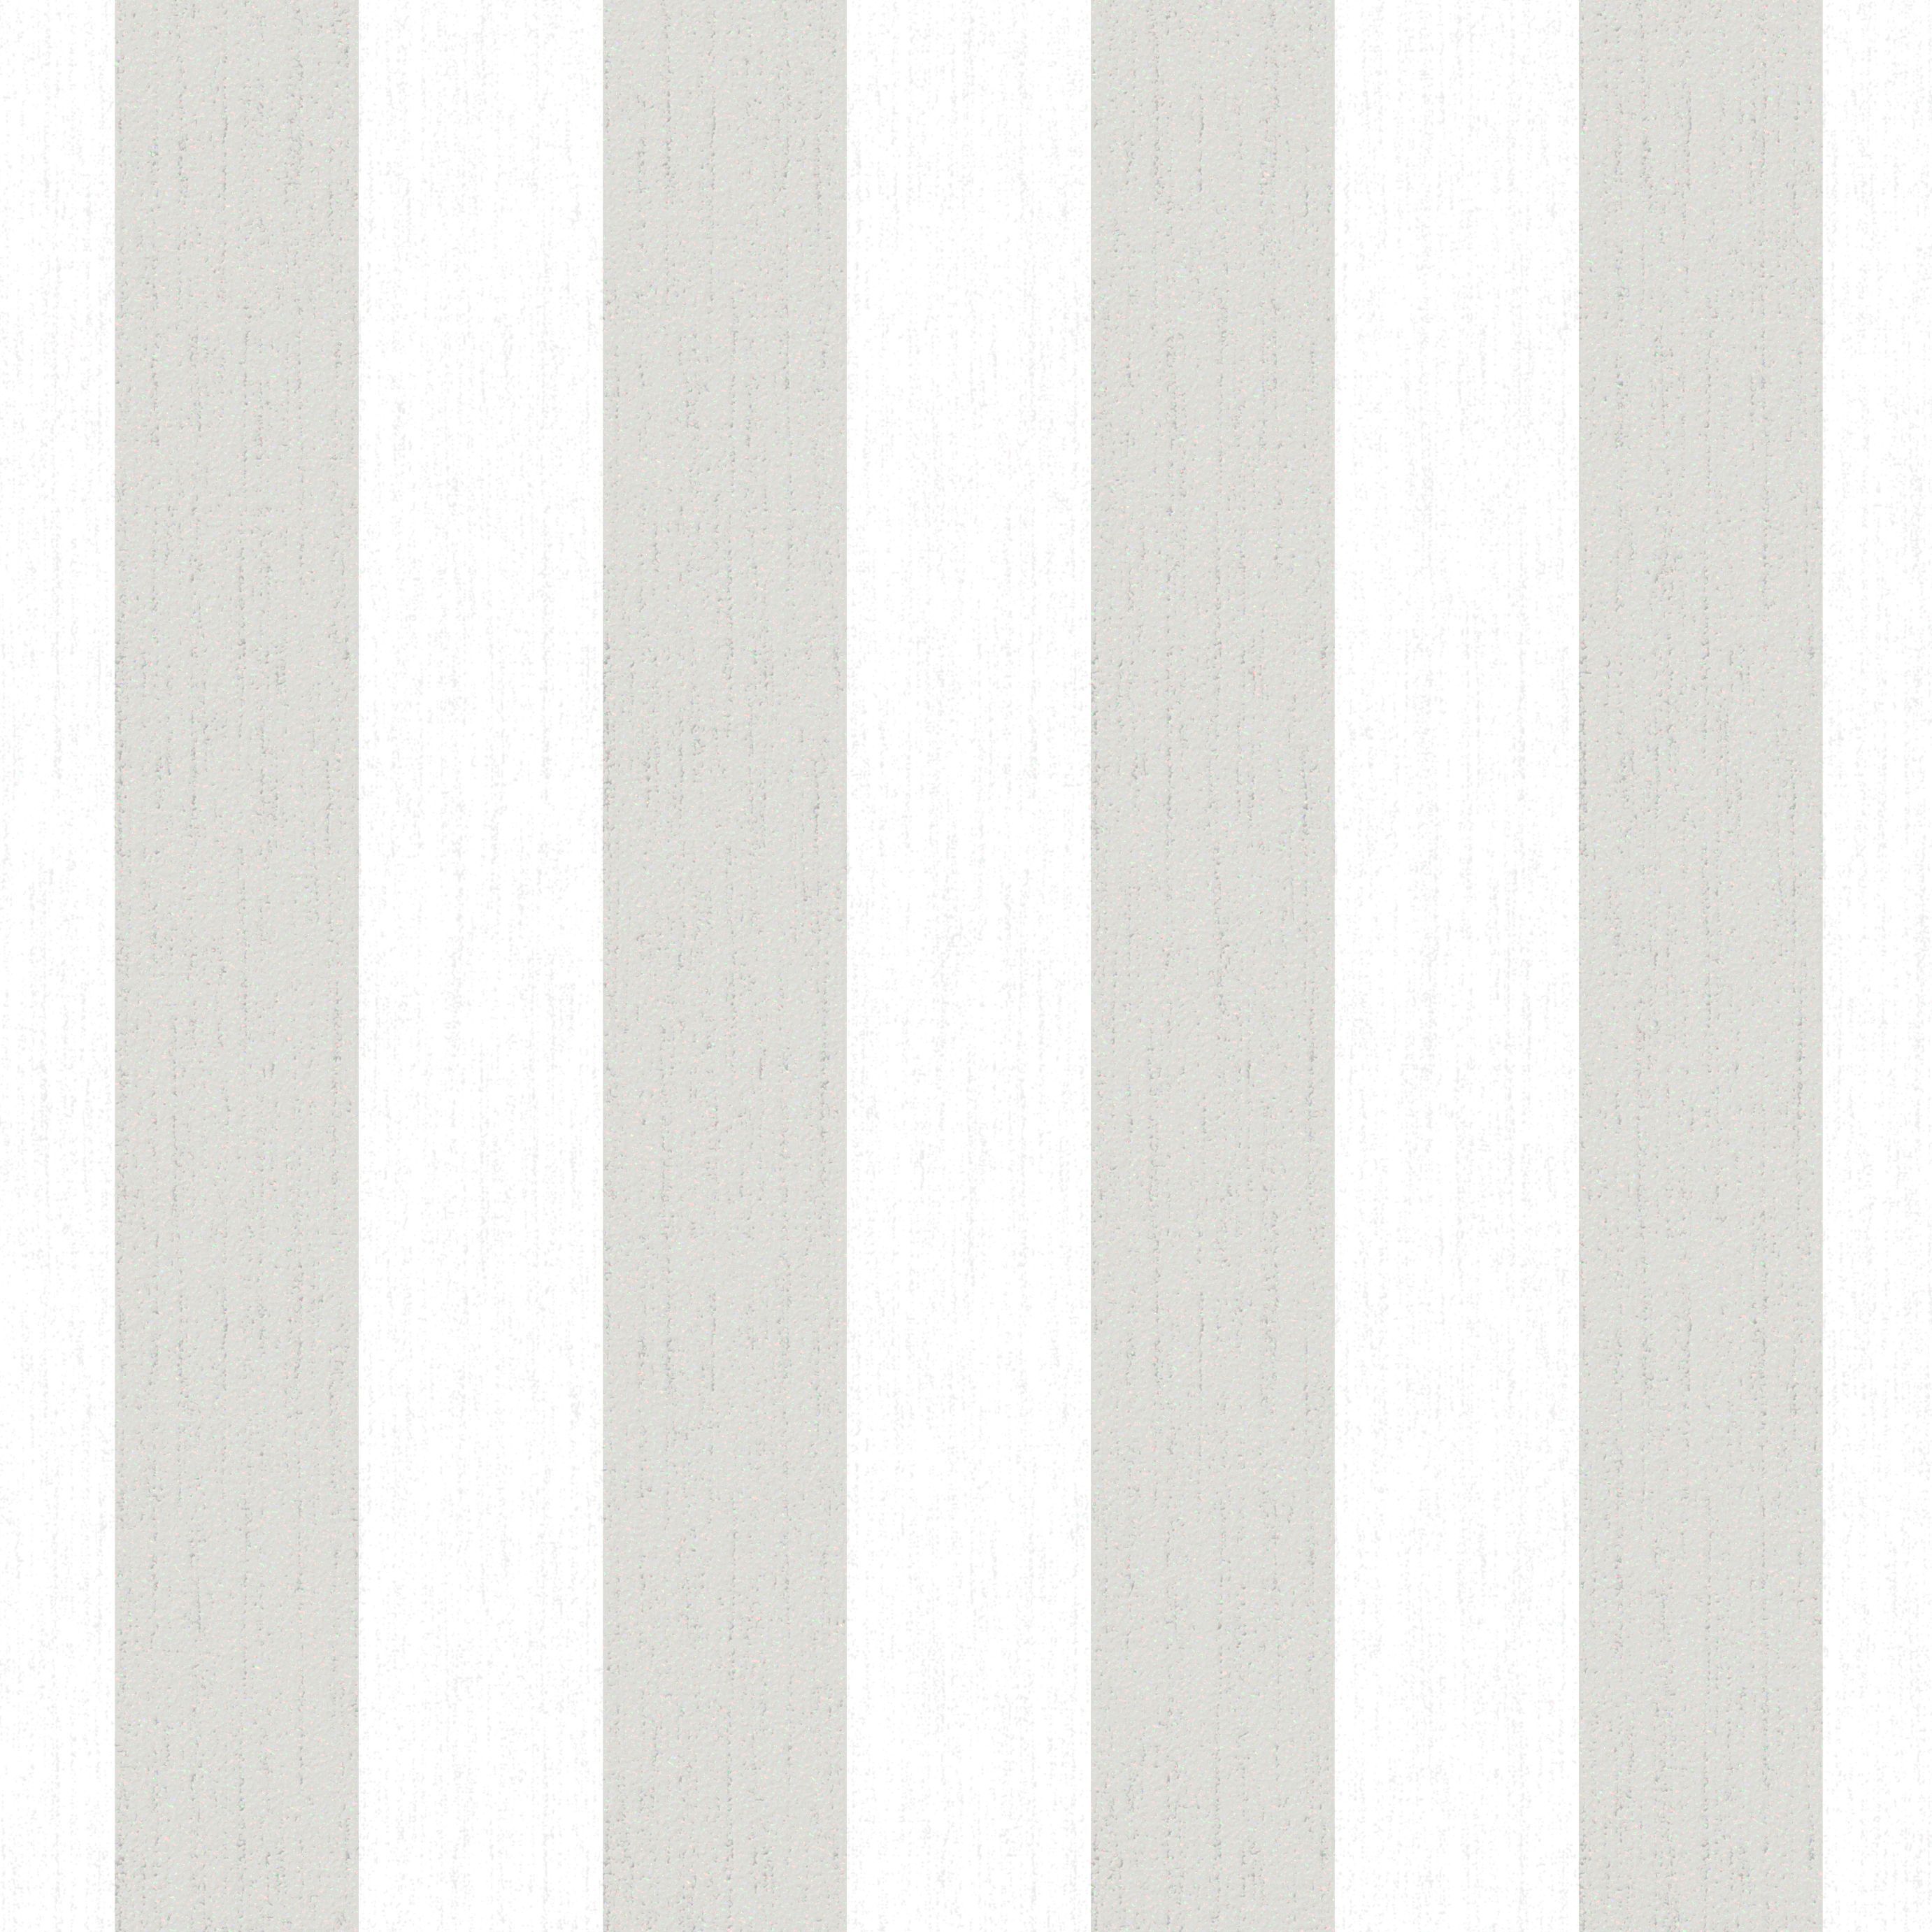 Julien MacDonald Glitterati White Silver glitter effect Striped Textured Wallpaper